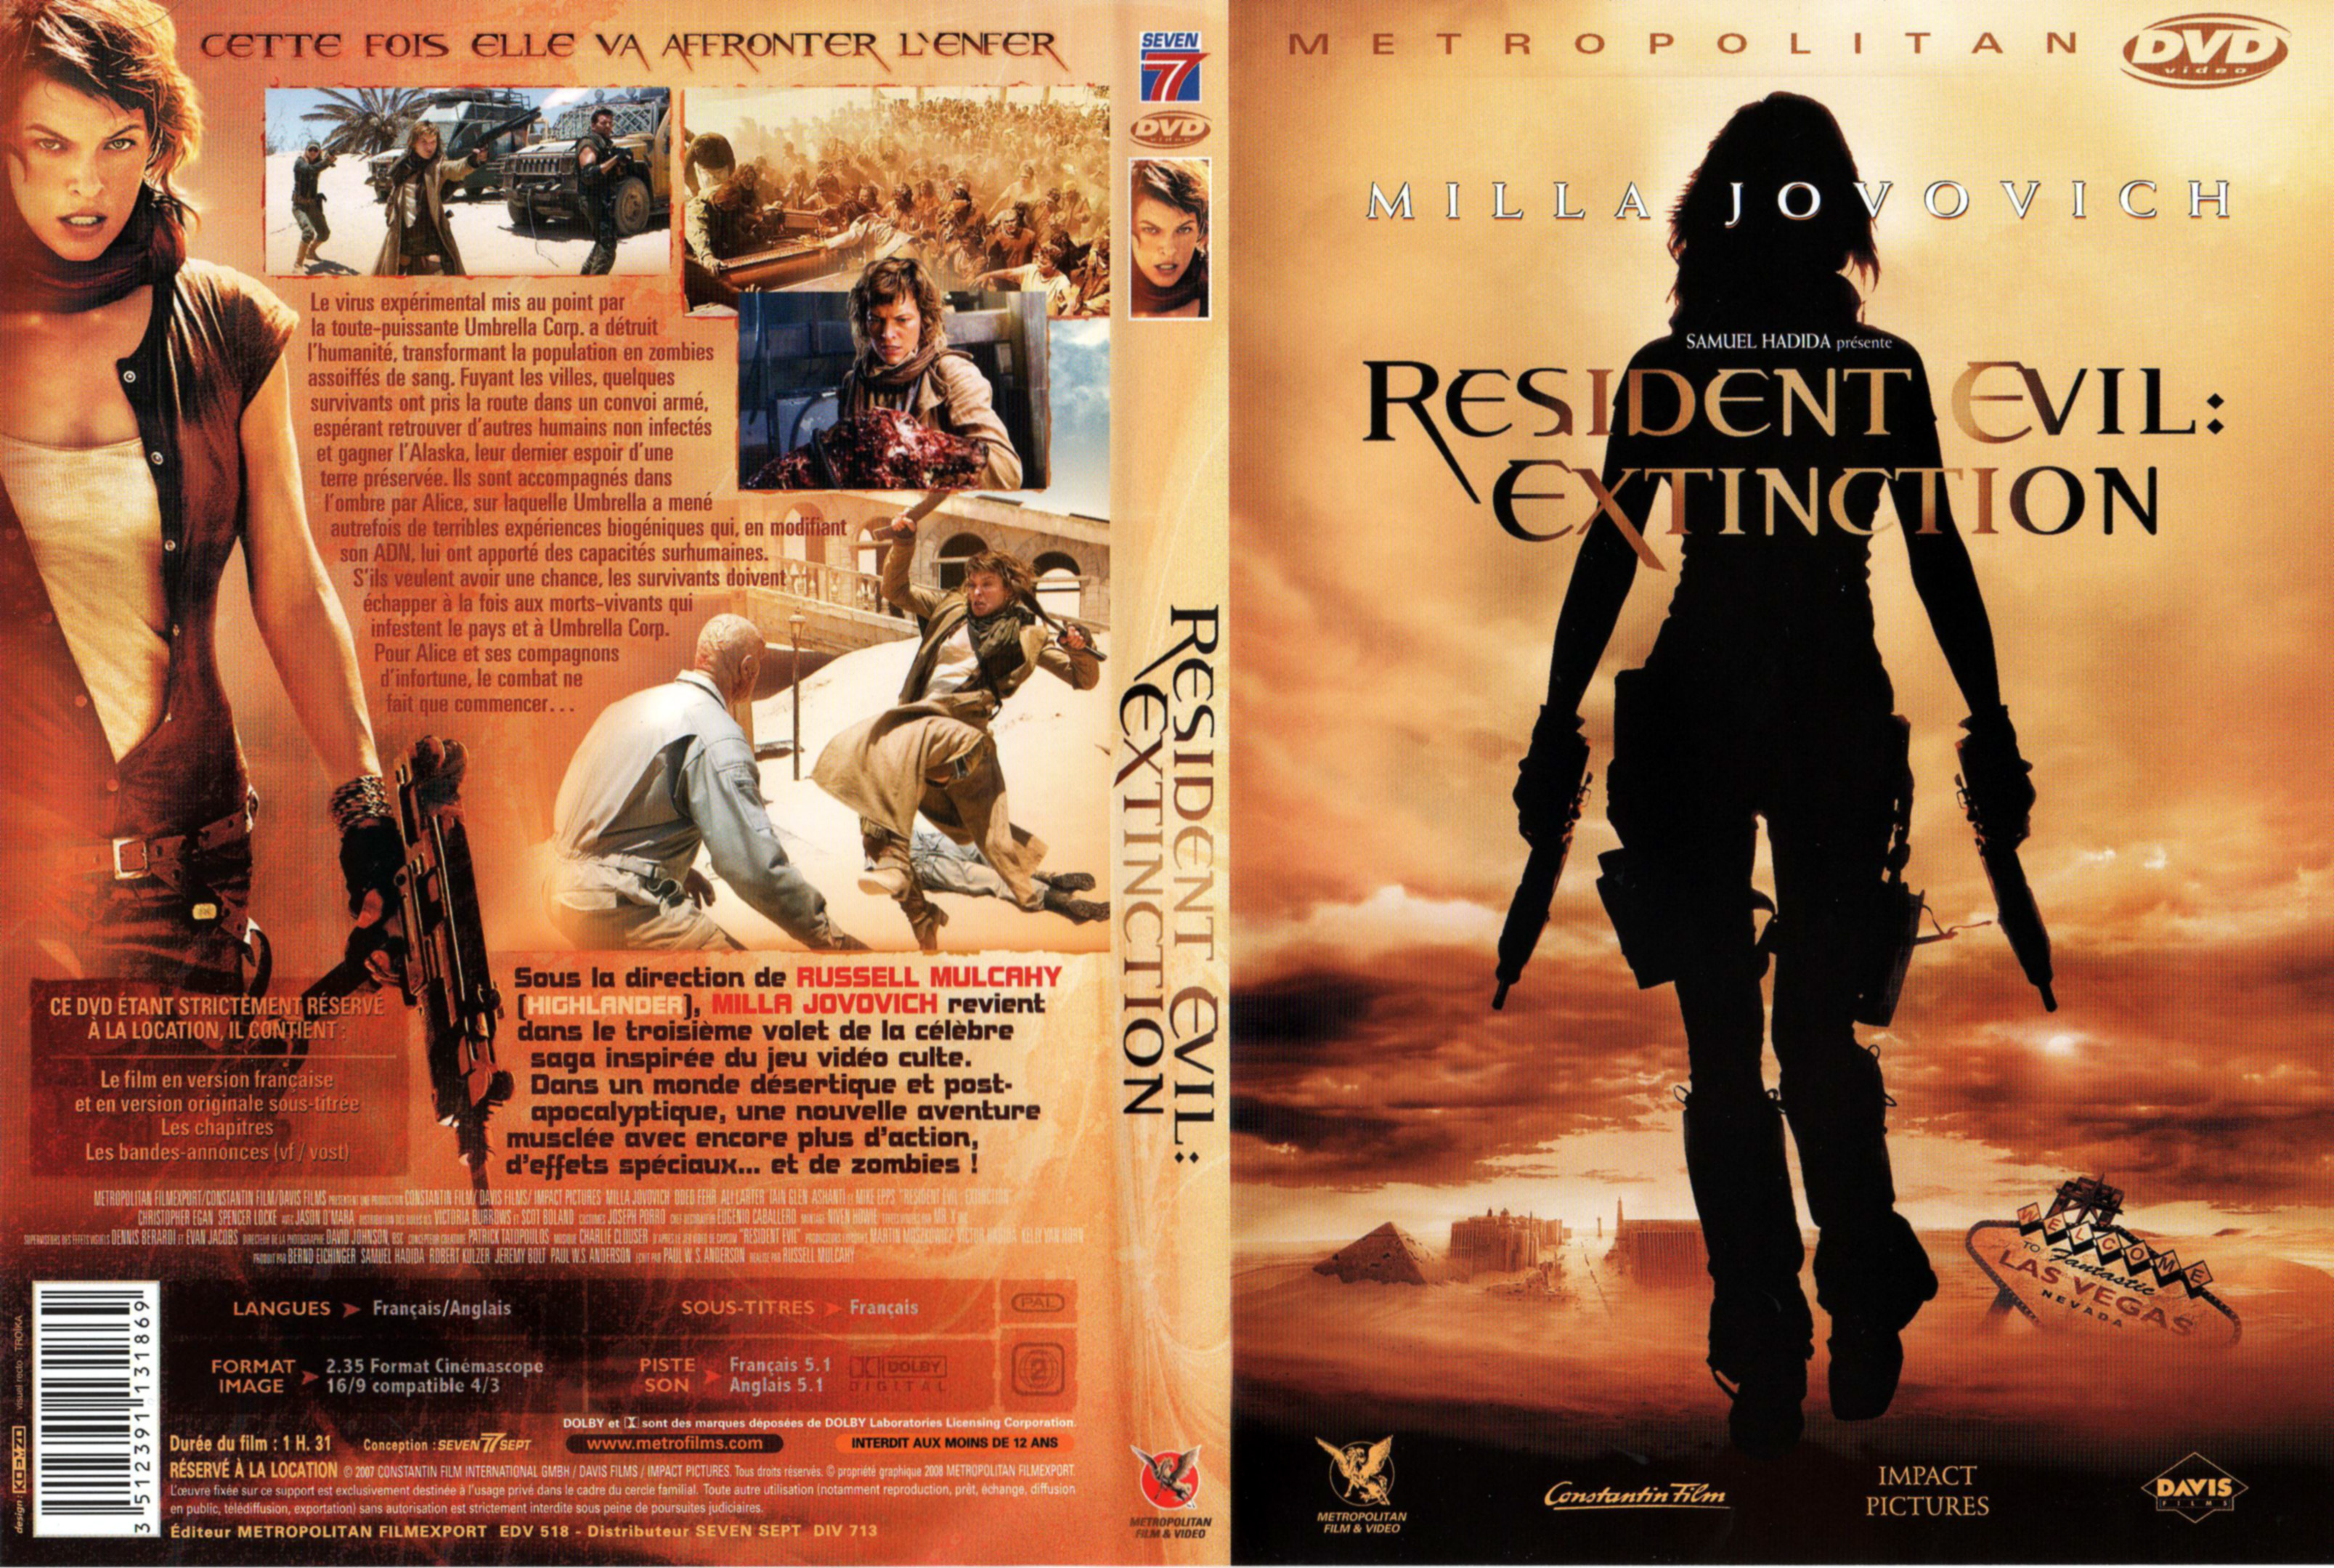 Jaquette DVD Resident evil extinction